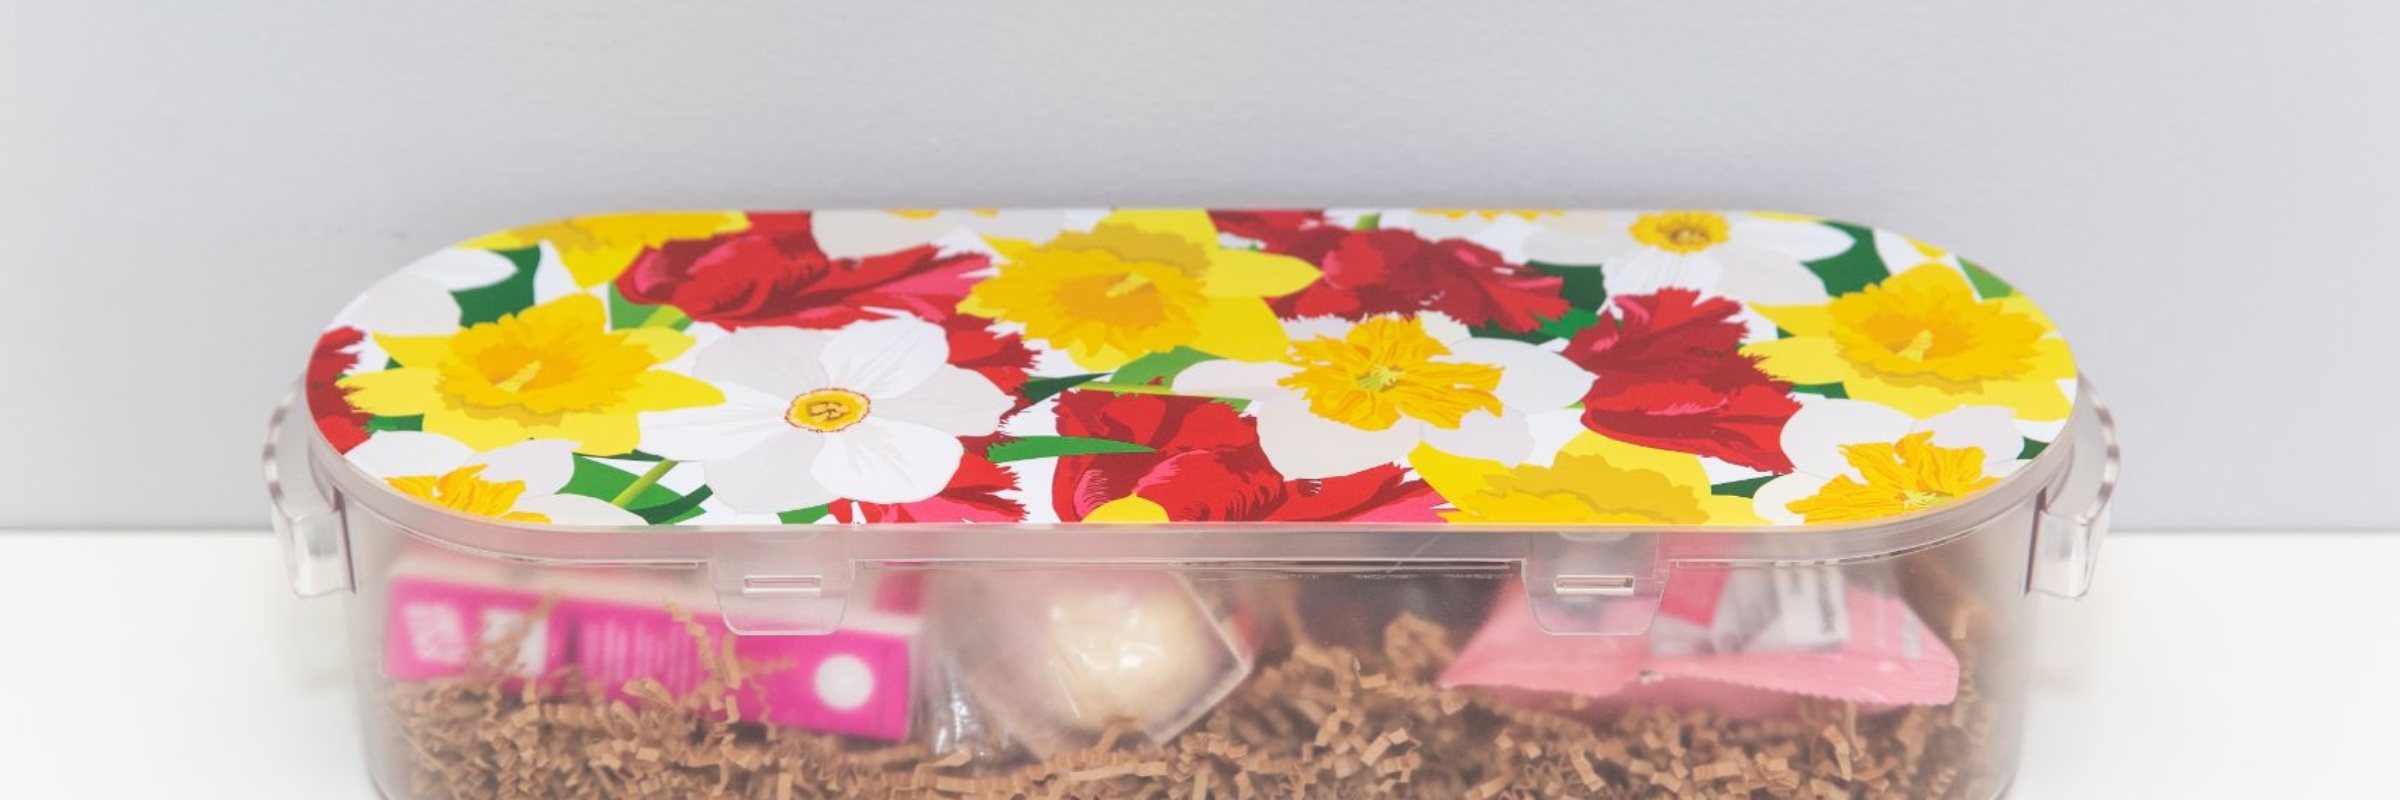 Nykia Designs - Koribox for Bathroom Storage or Reusable Gift Packaging